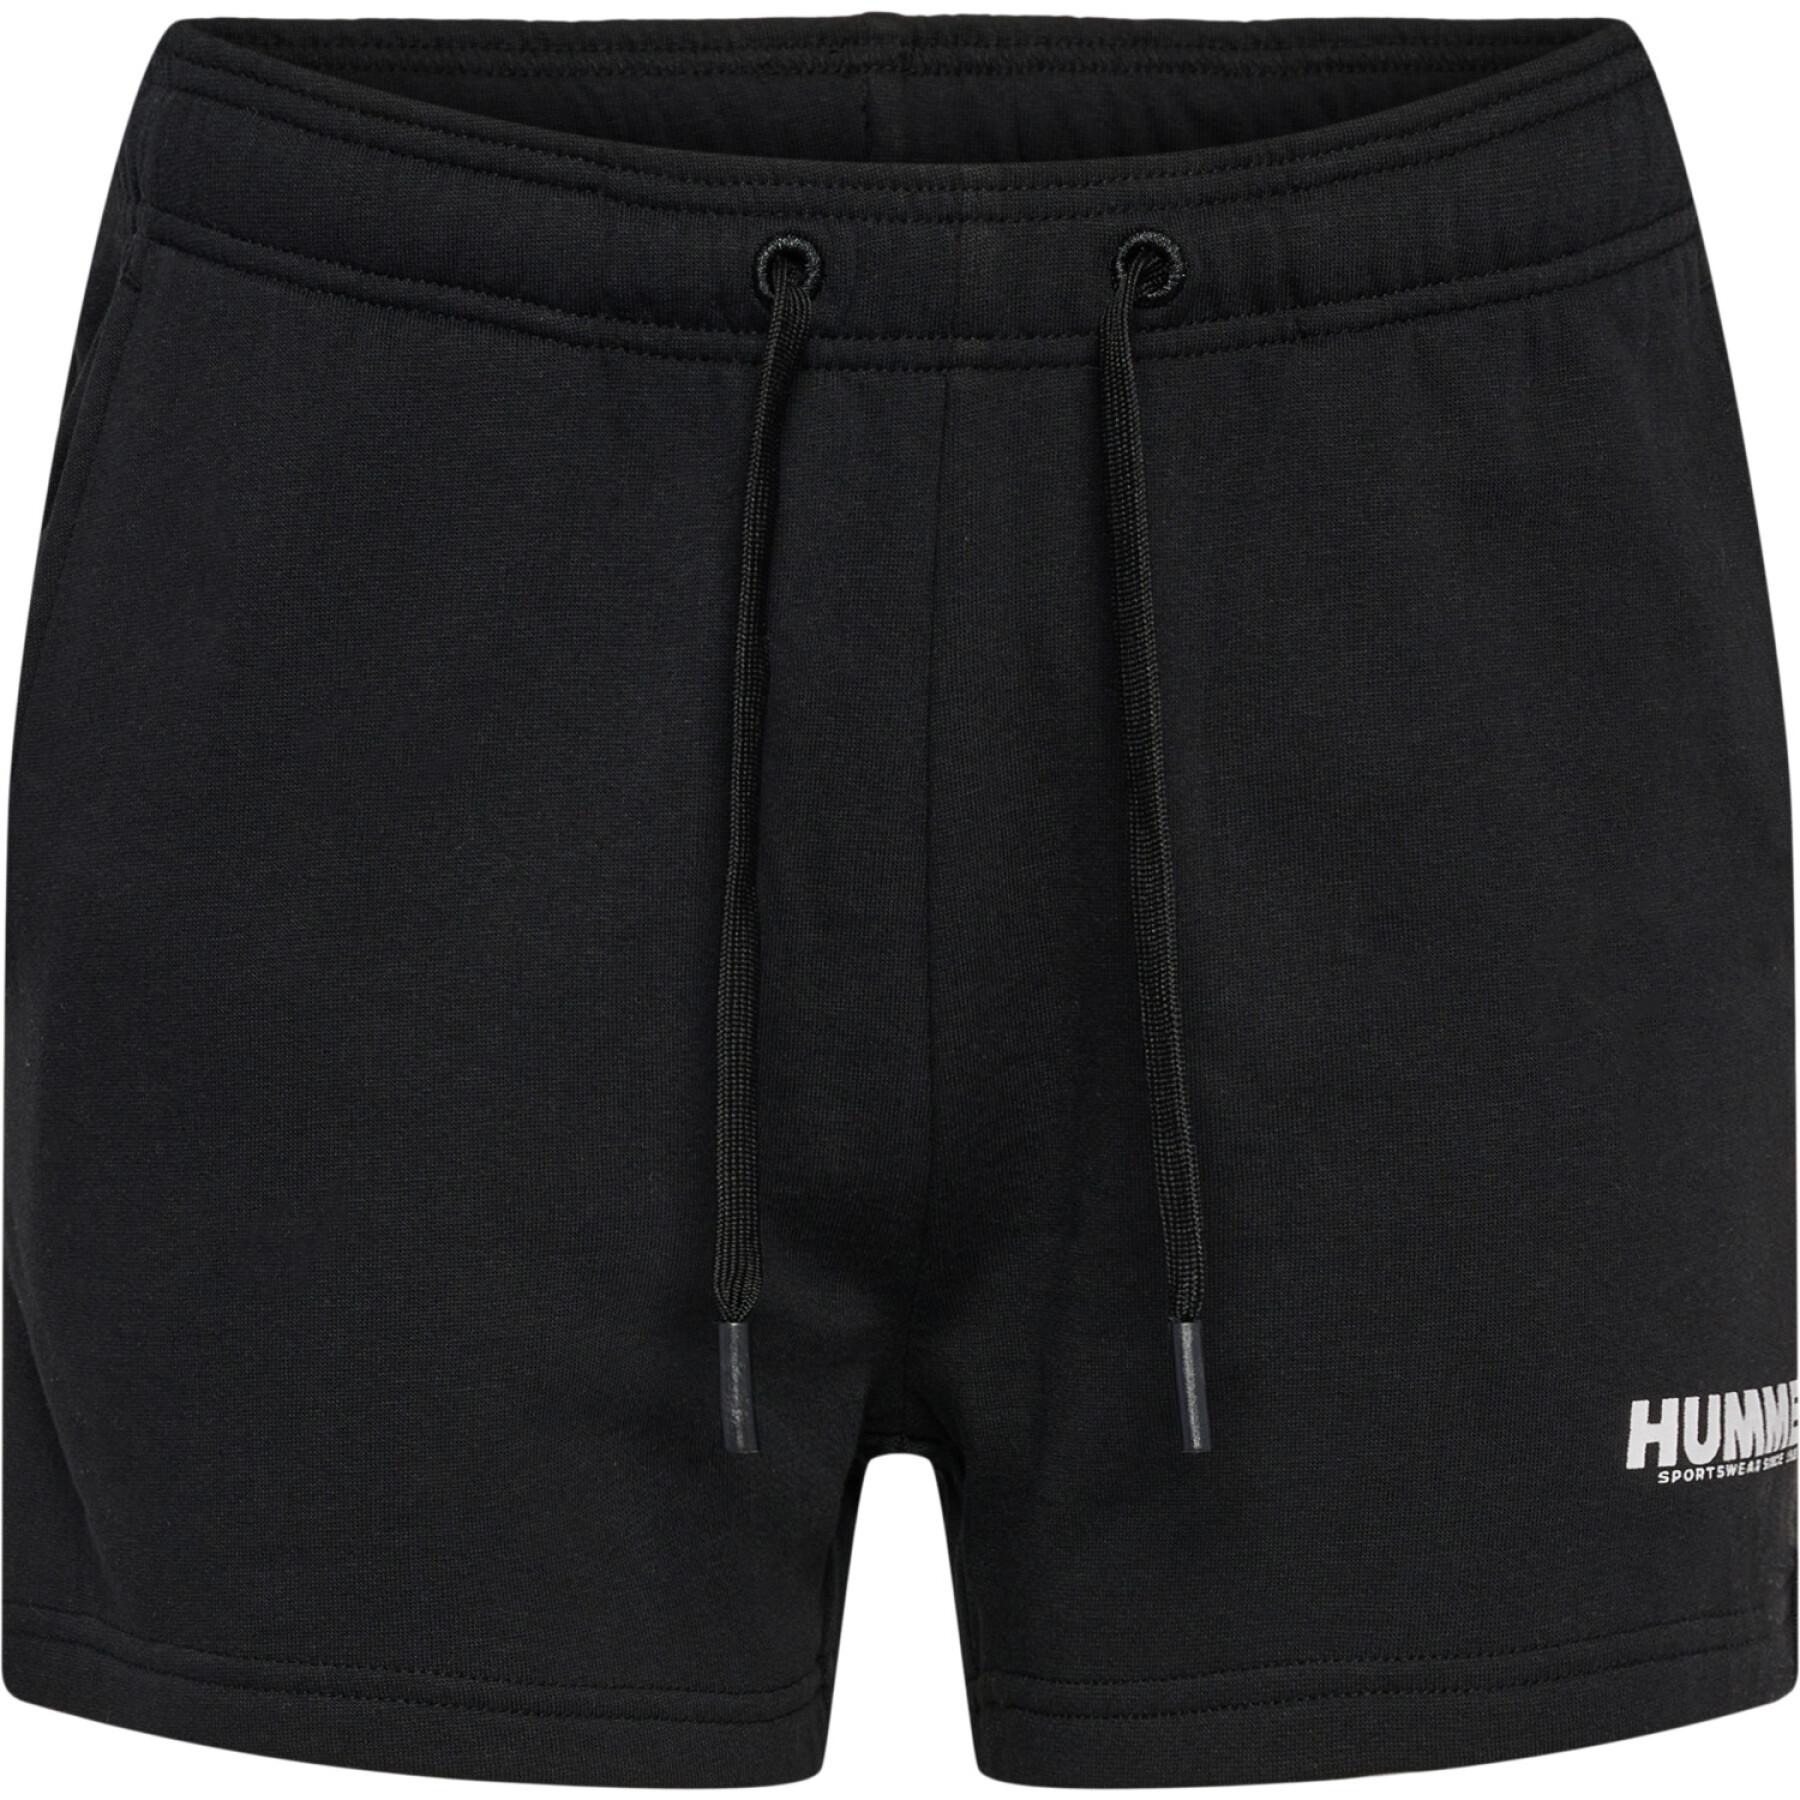 Women\'s shorts Hummel Legacy - - Hummel - Brands Lifestyle